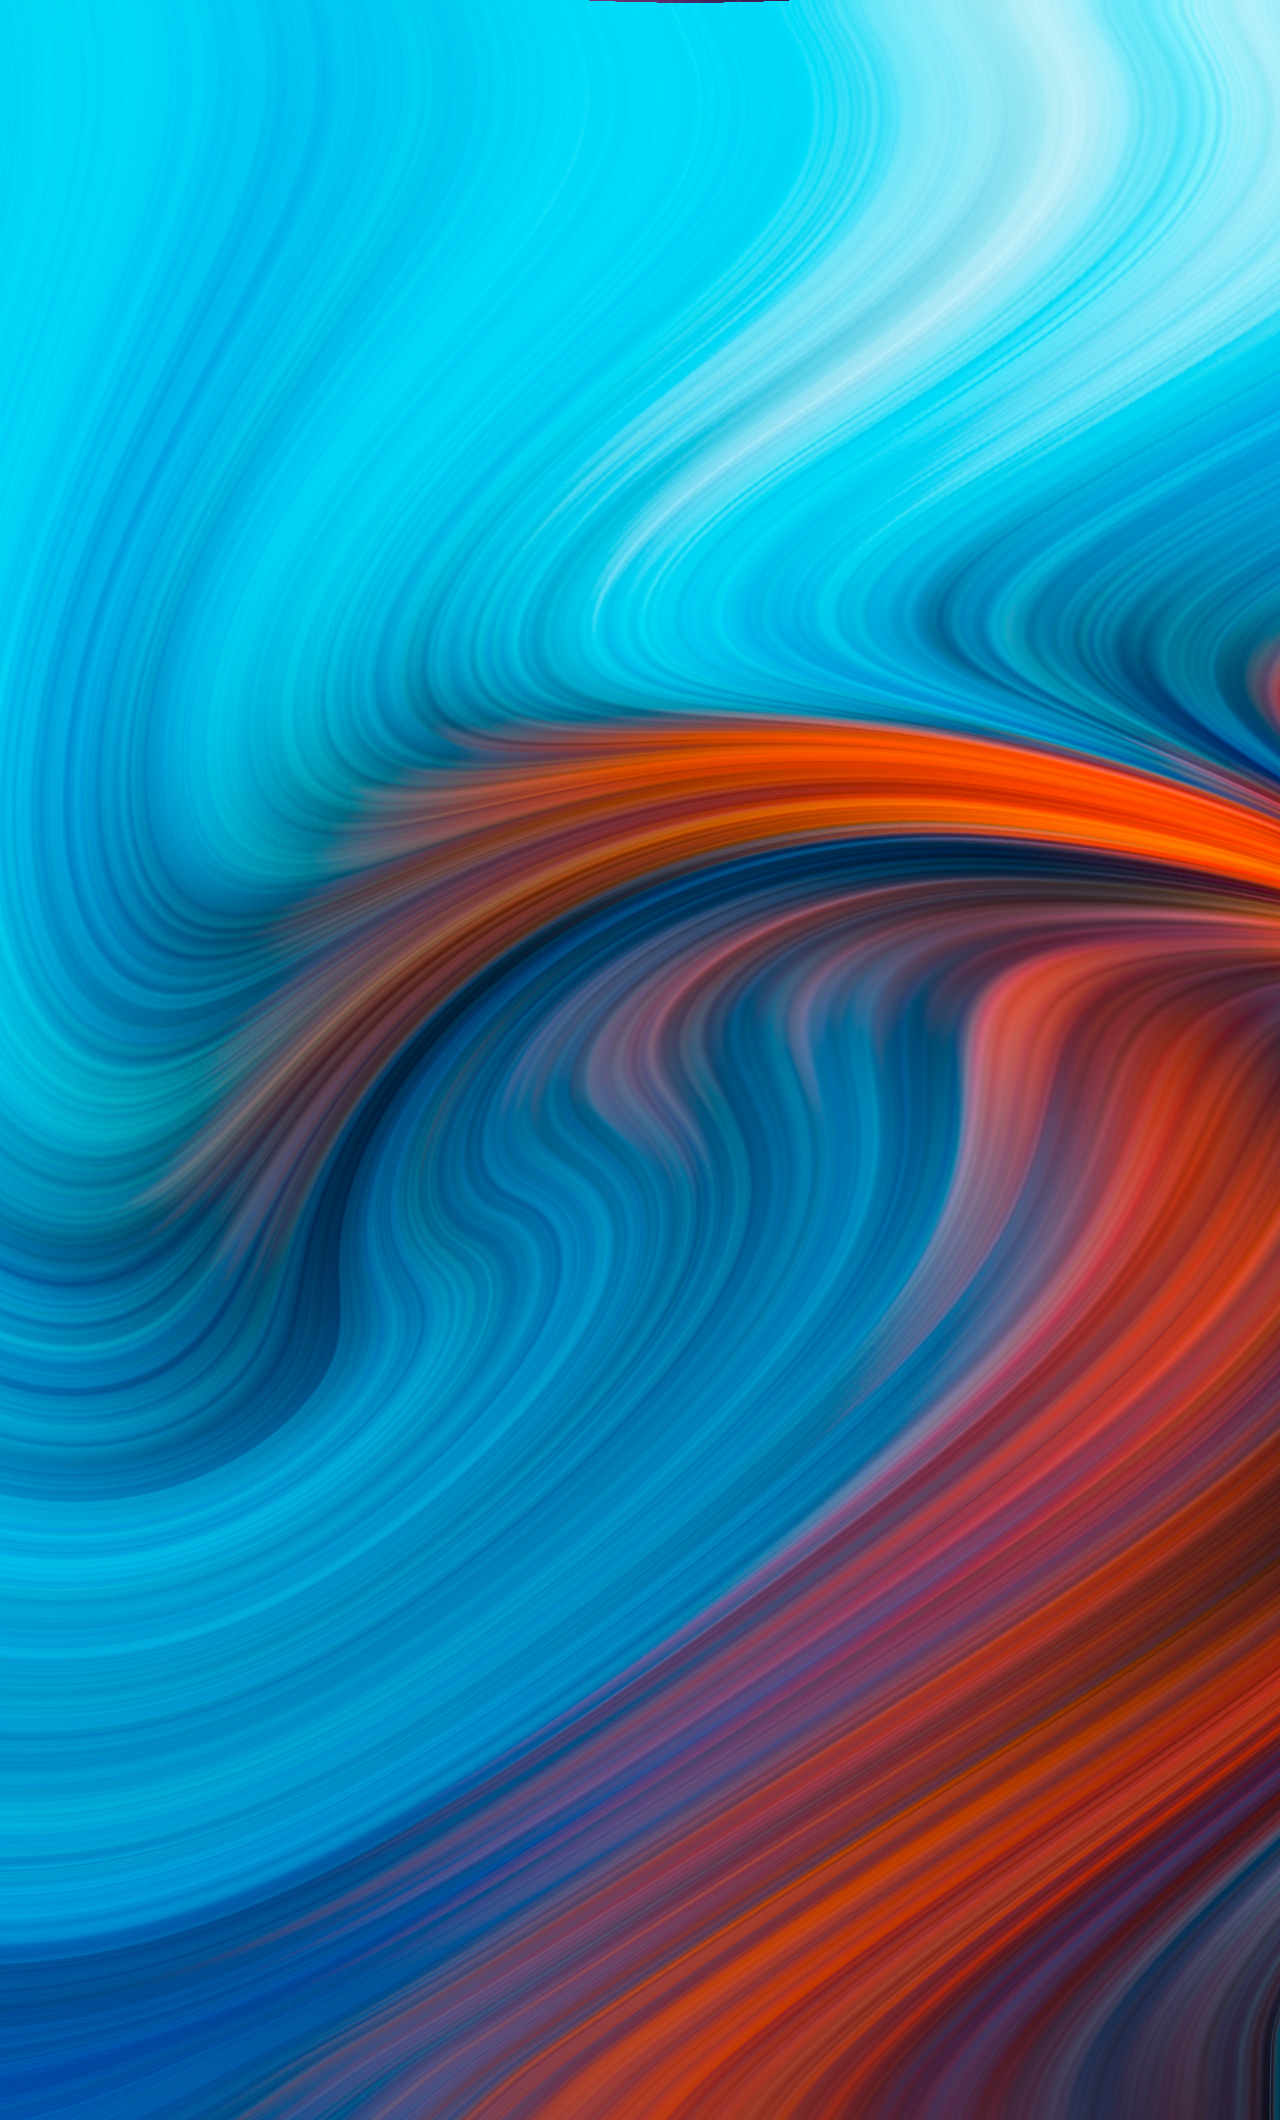 Download wallpaper 1280x2120 blue orange swirl, pattern, abstraction, iphone 6 plus, 1280x2120 HD background, 24043